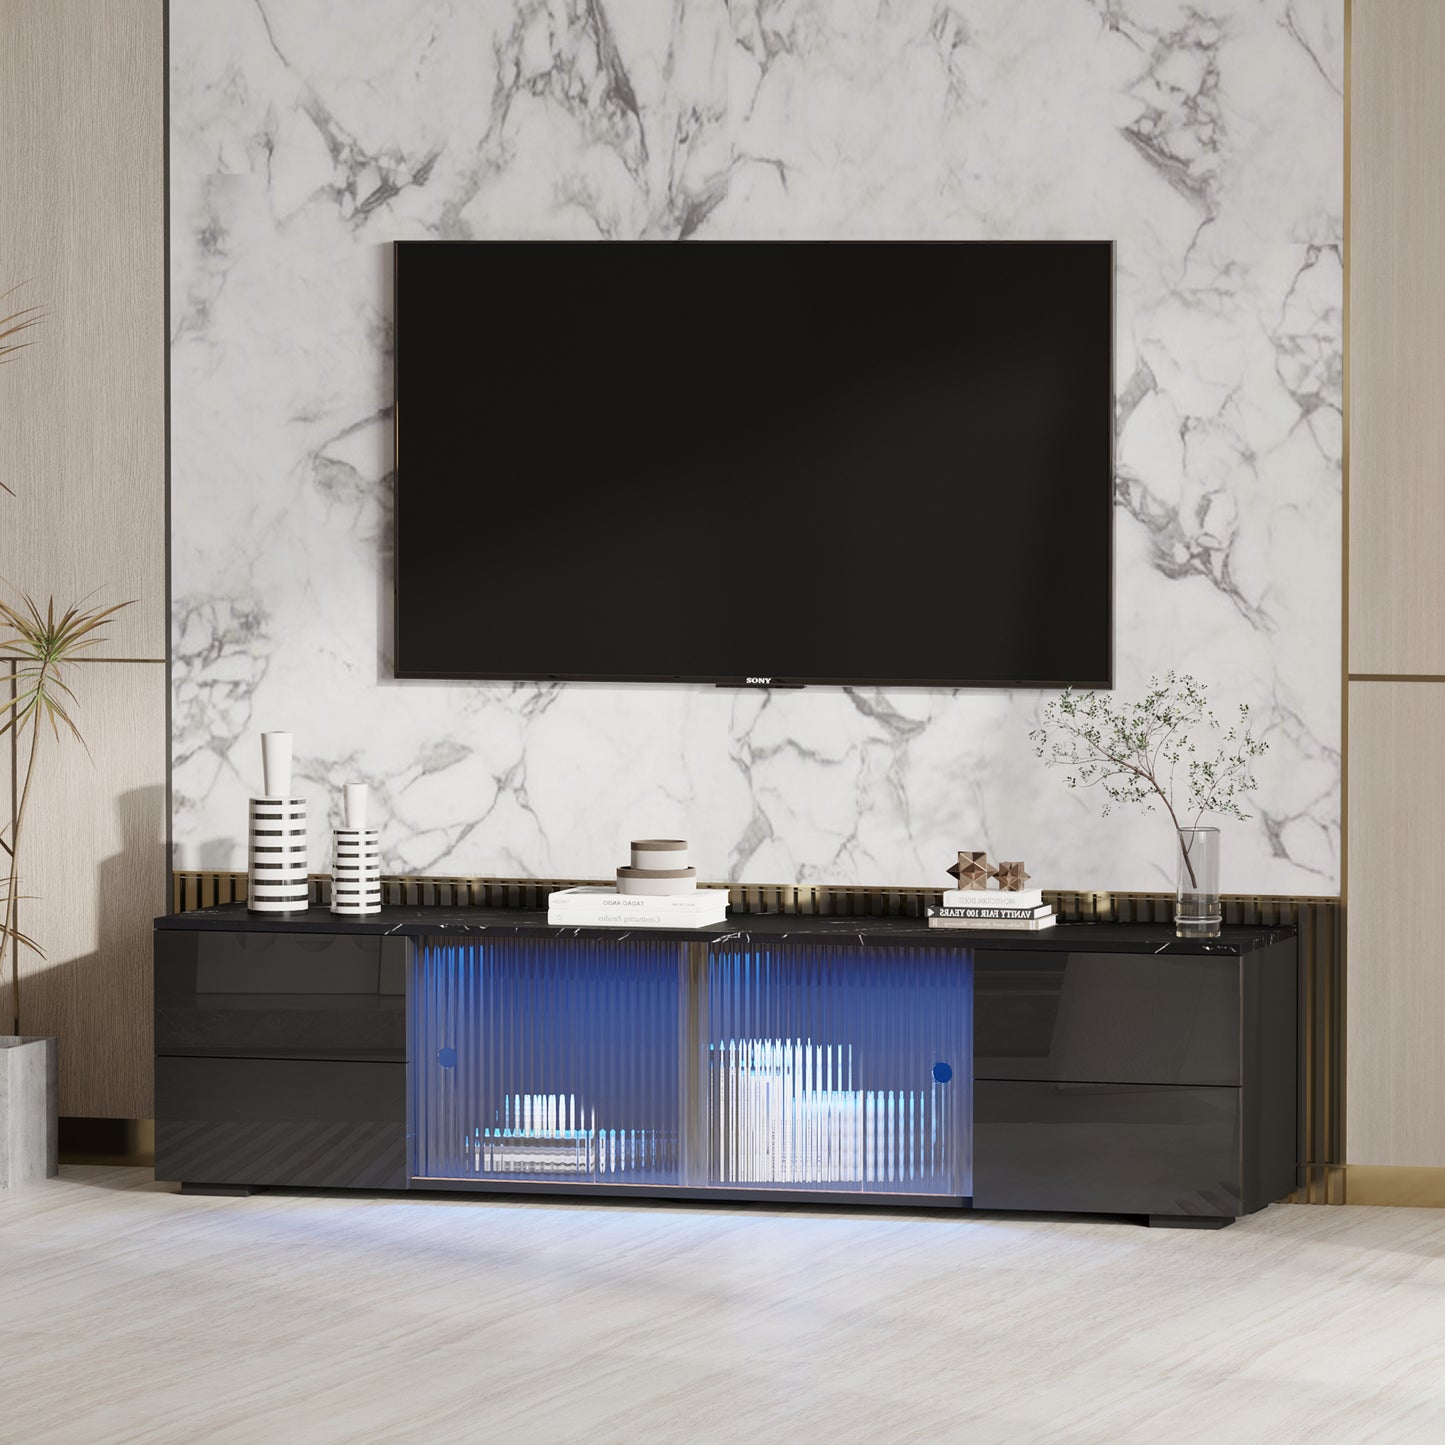 canon Tv Console in Black Finish w/ UV Drawer Panels